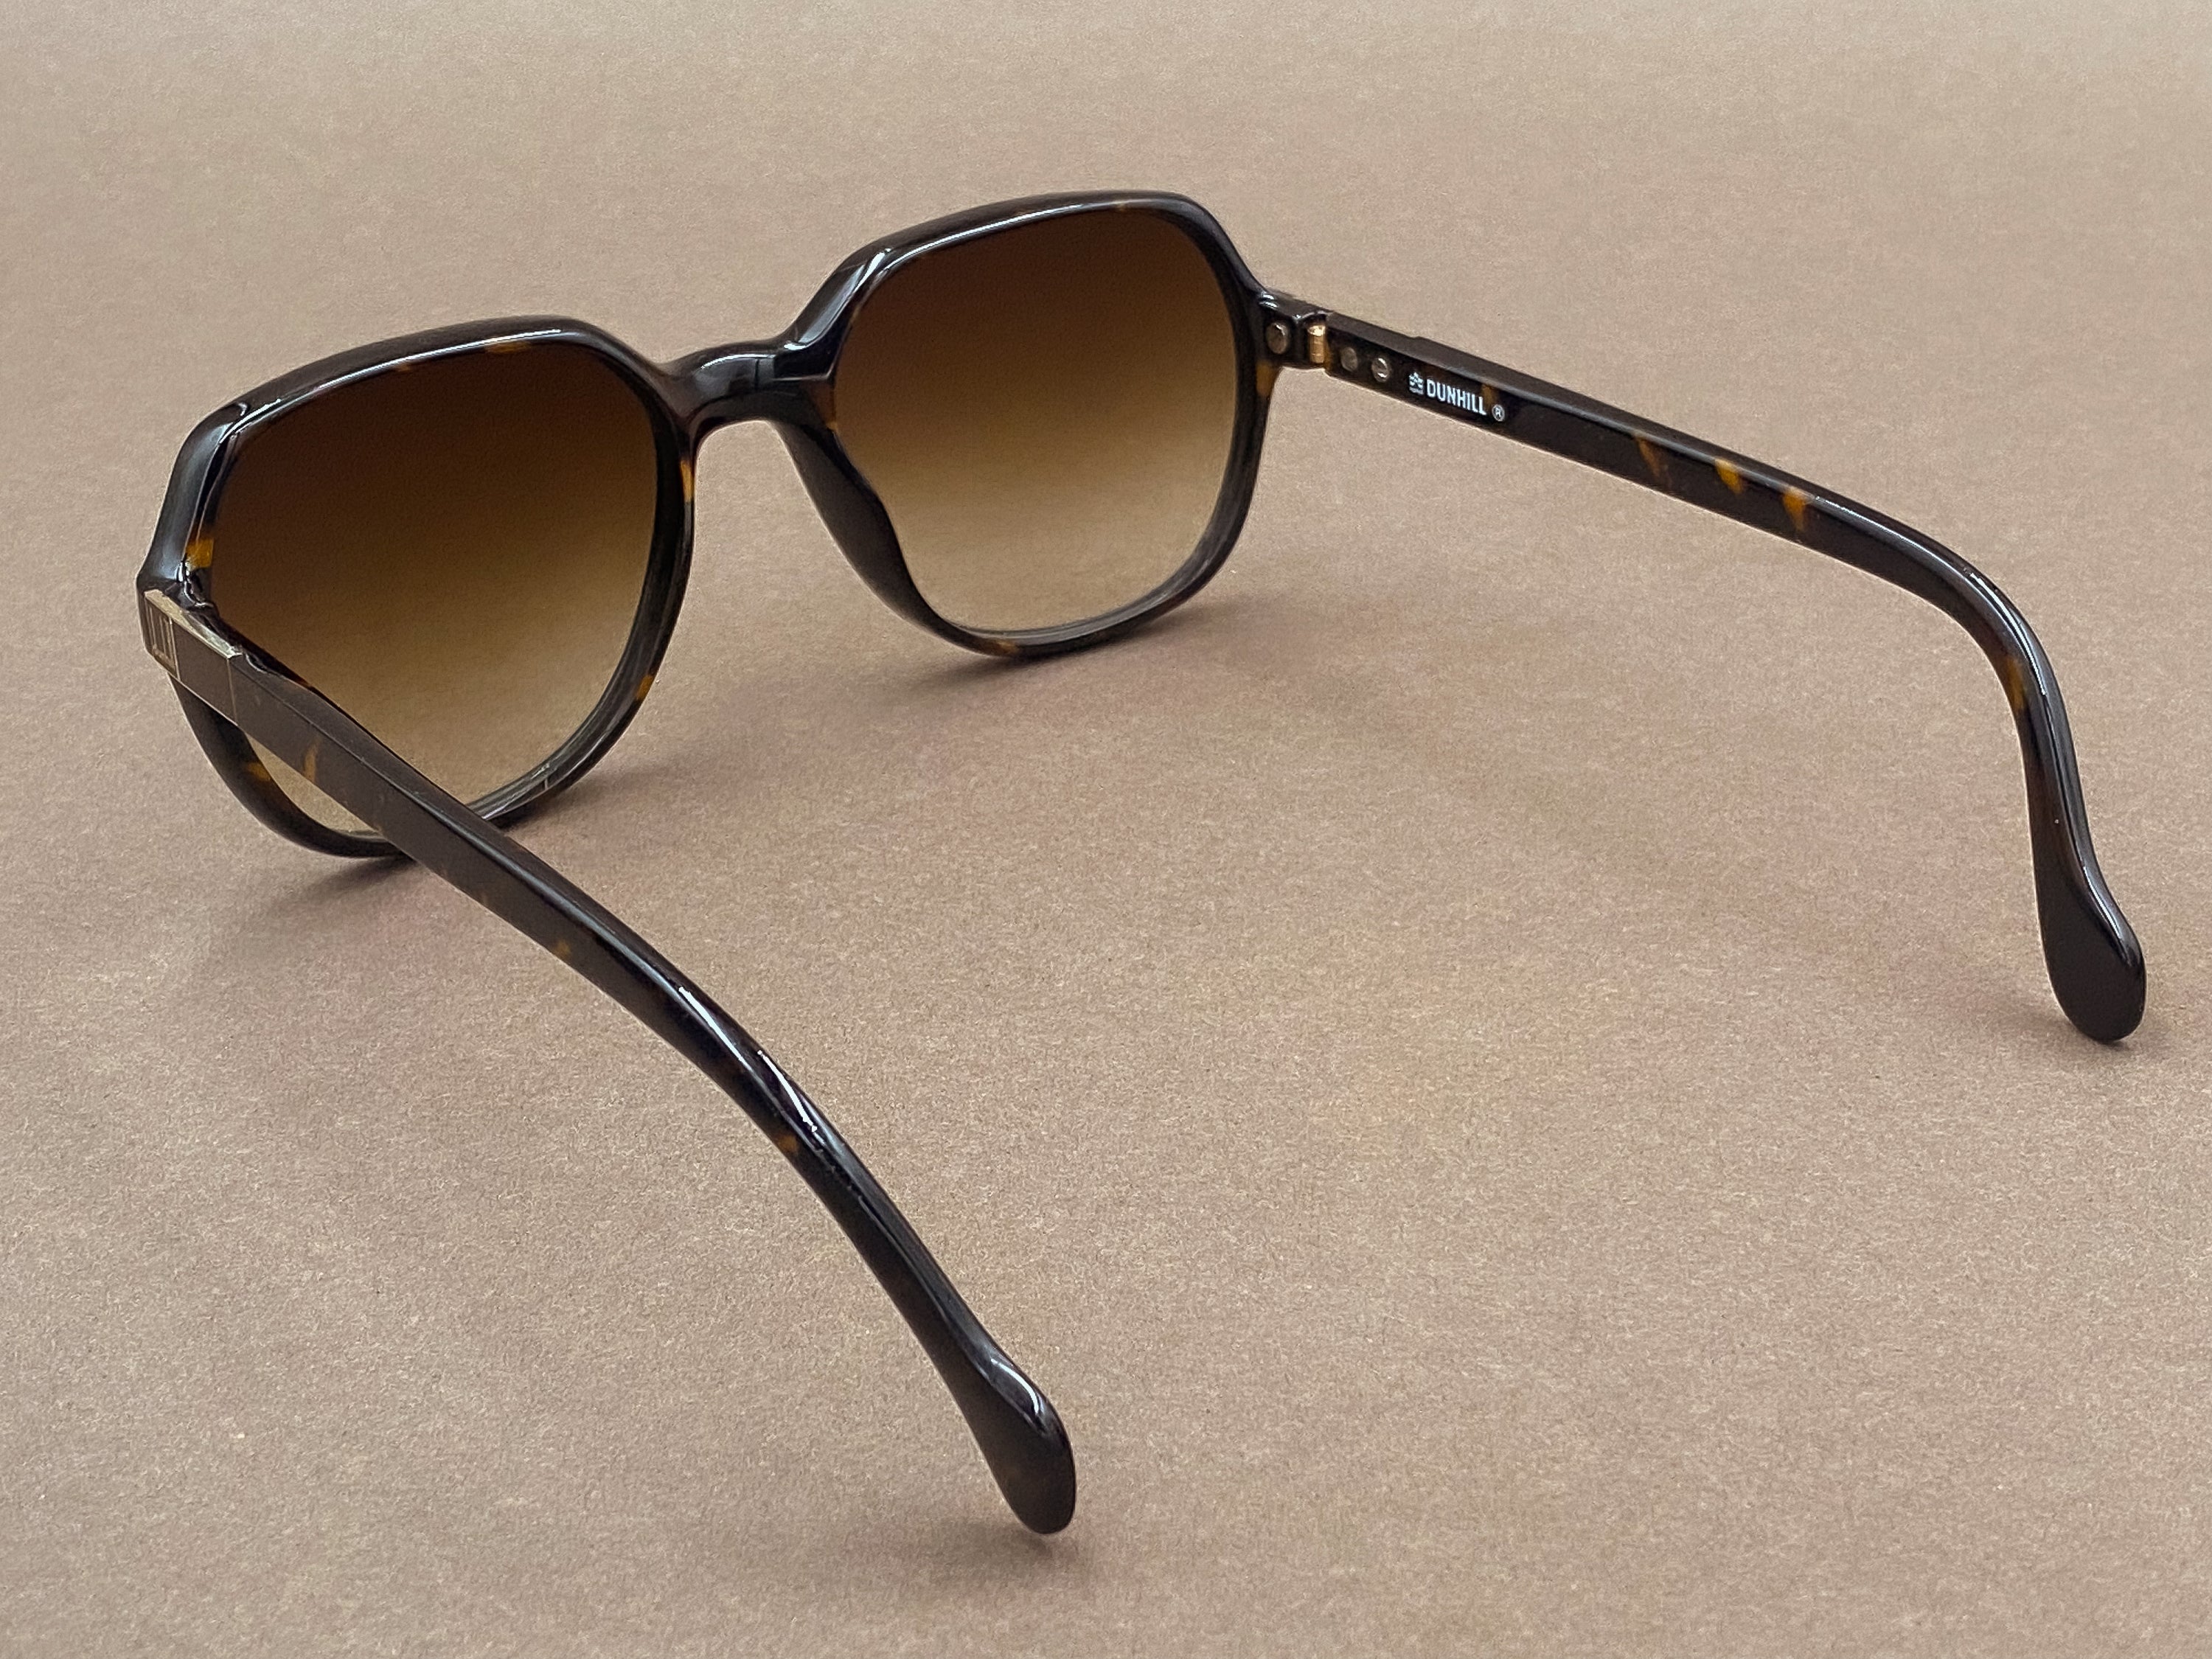 Dunhill 6032 sunglasses